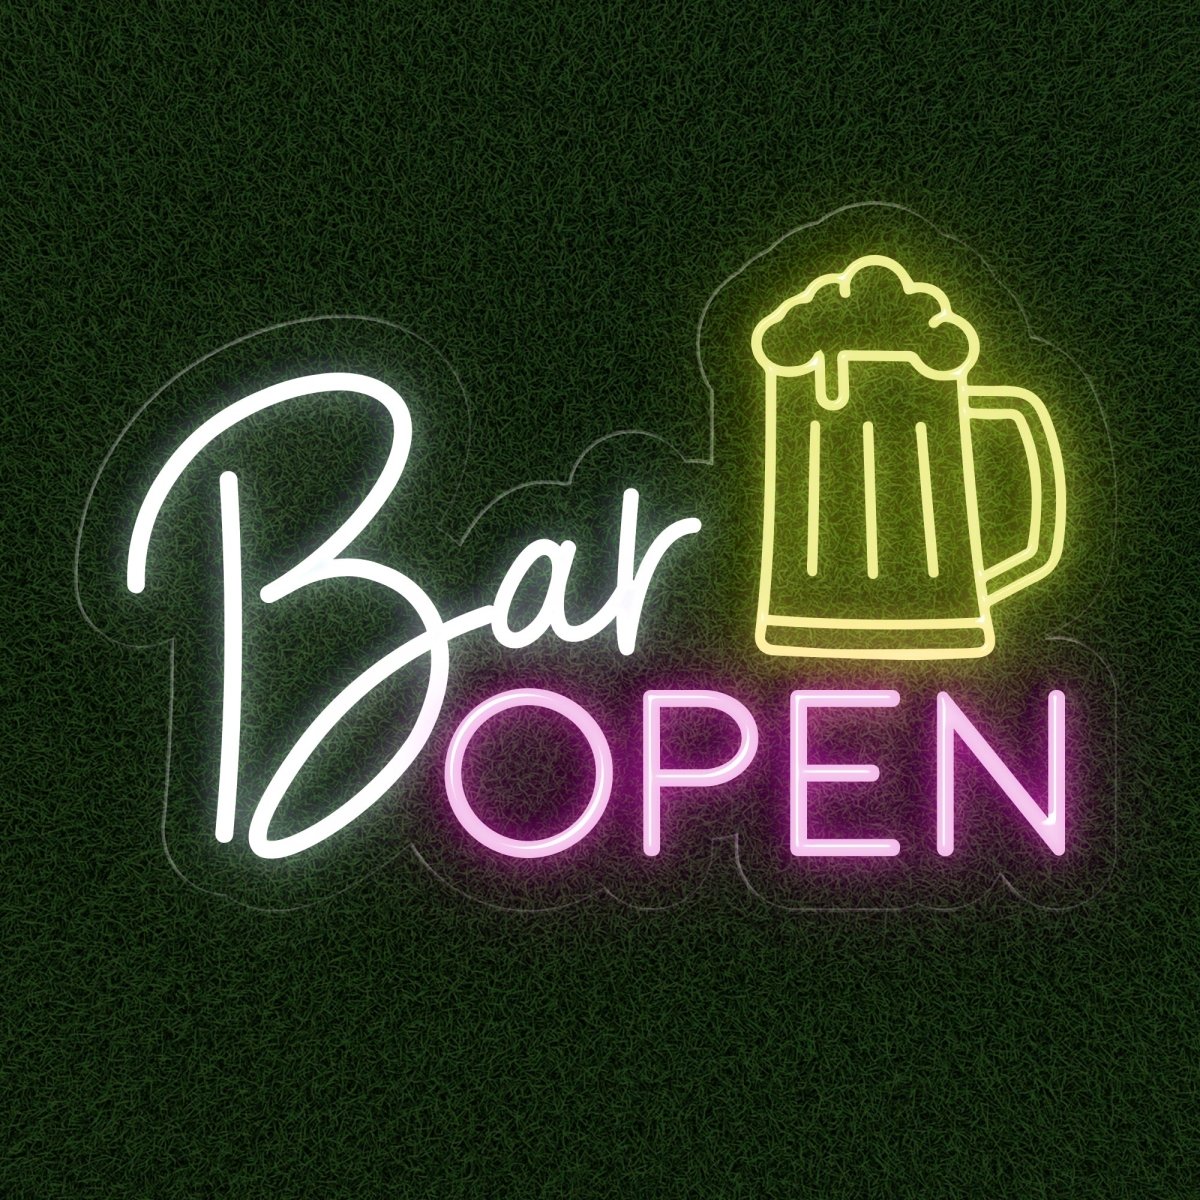 Bar Open LED Neon Sign for Home Bar | Light-Up Sign - NEONXPERT